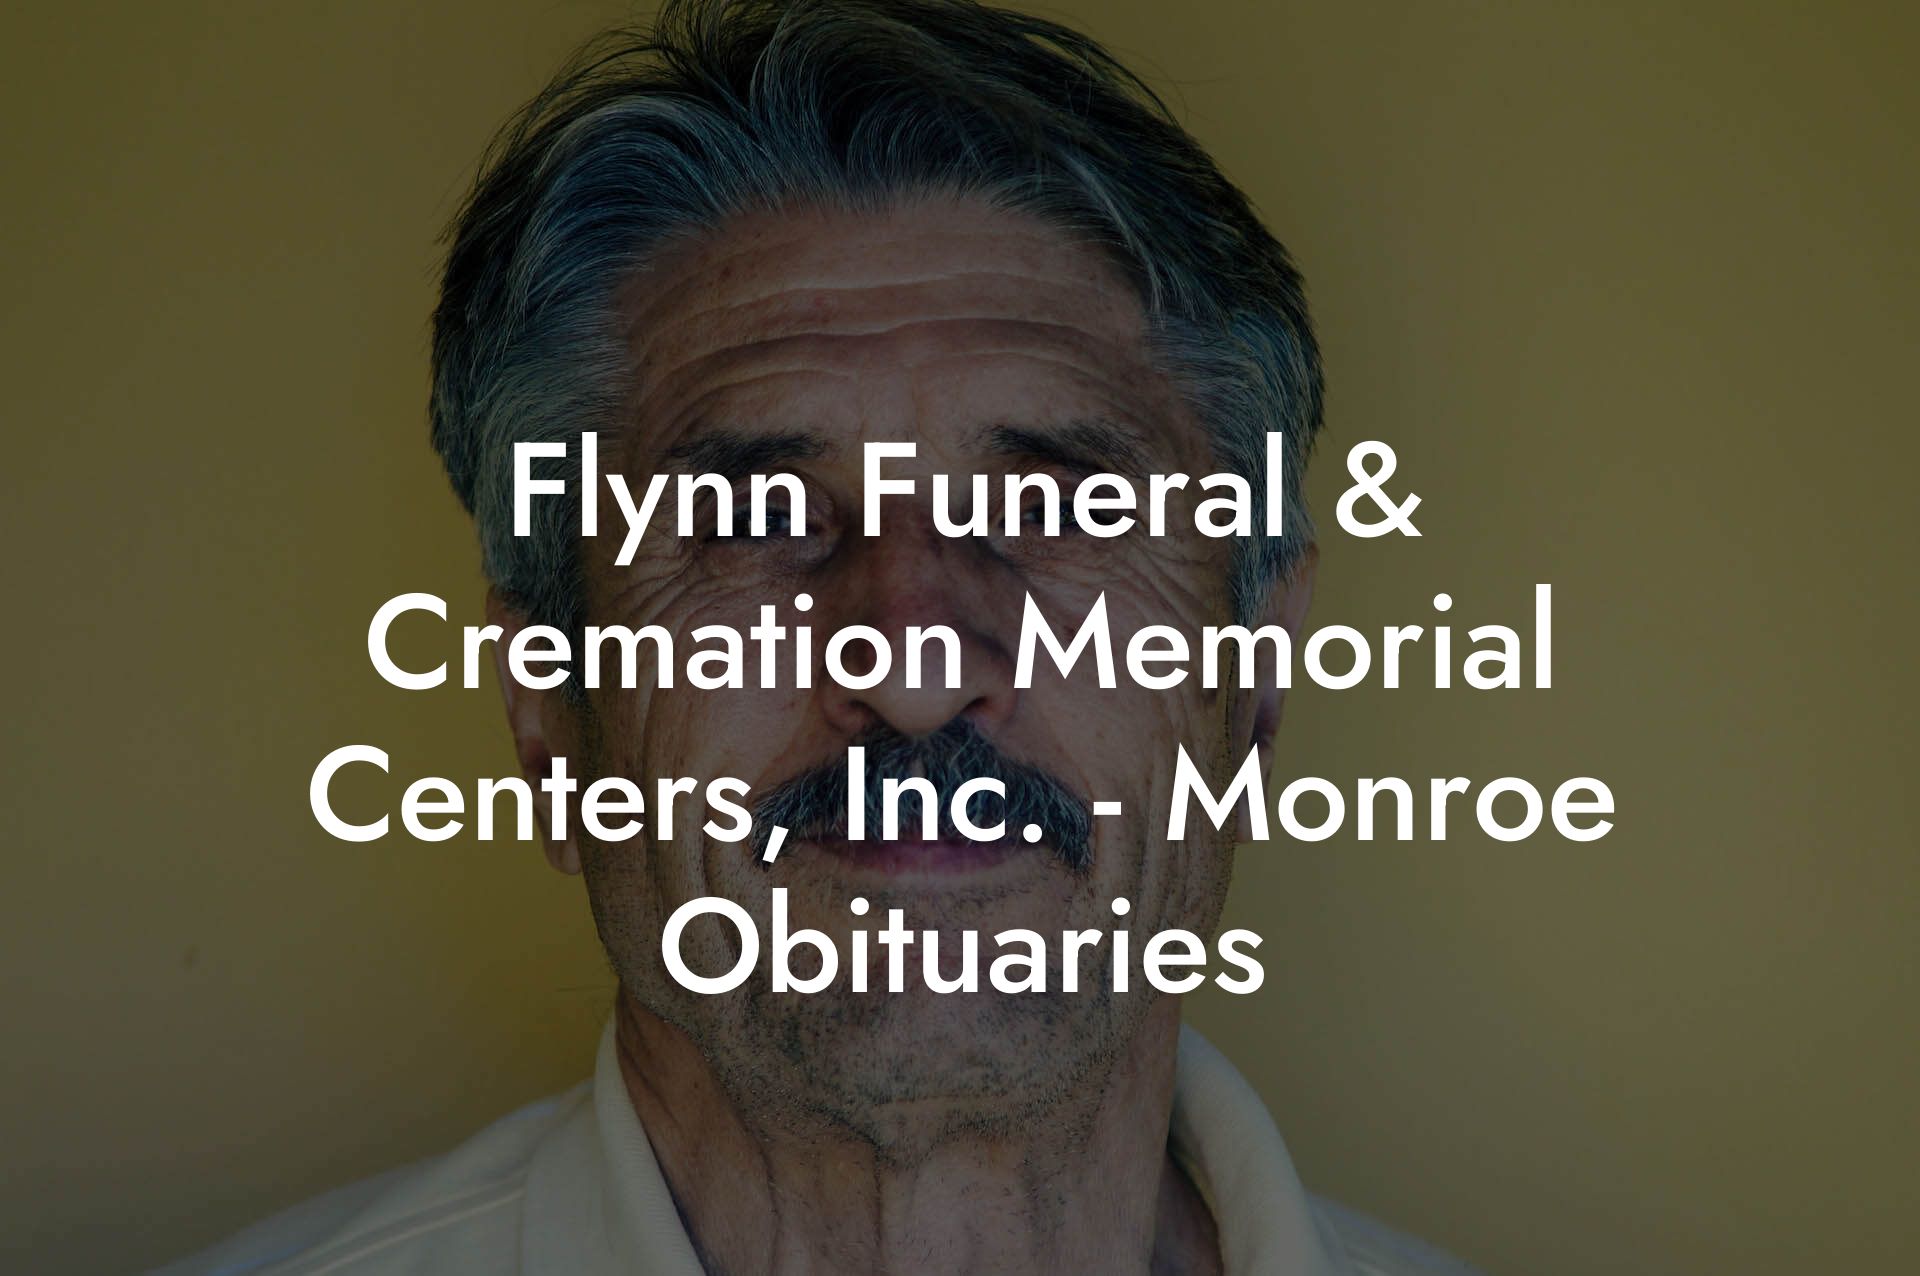 Flynn Funeral & Cremation Memorial Centers, Inc. - Monroe Obituaries